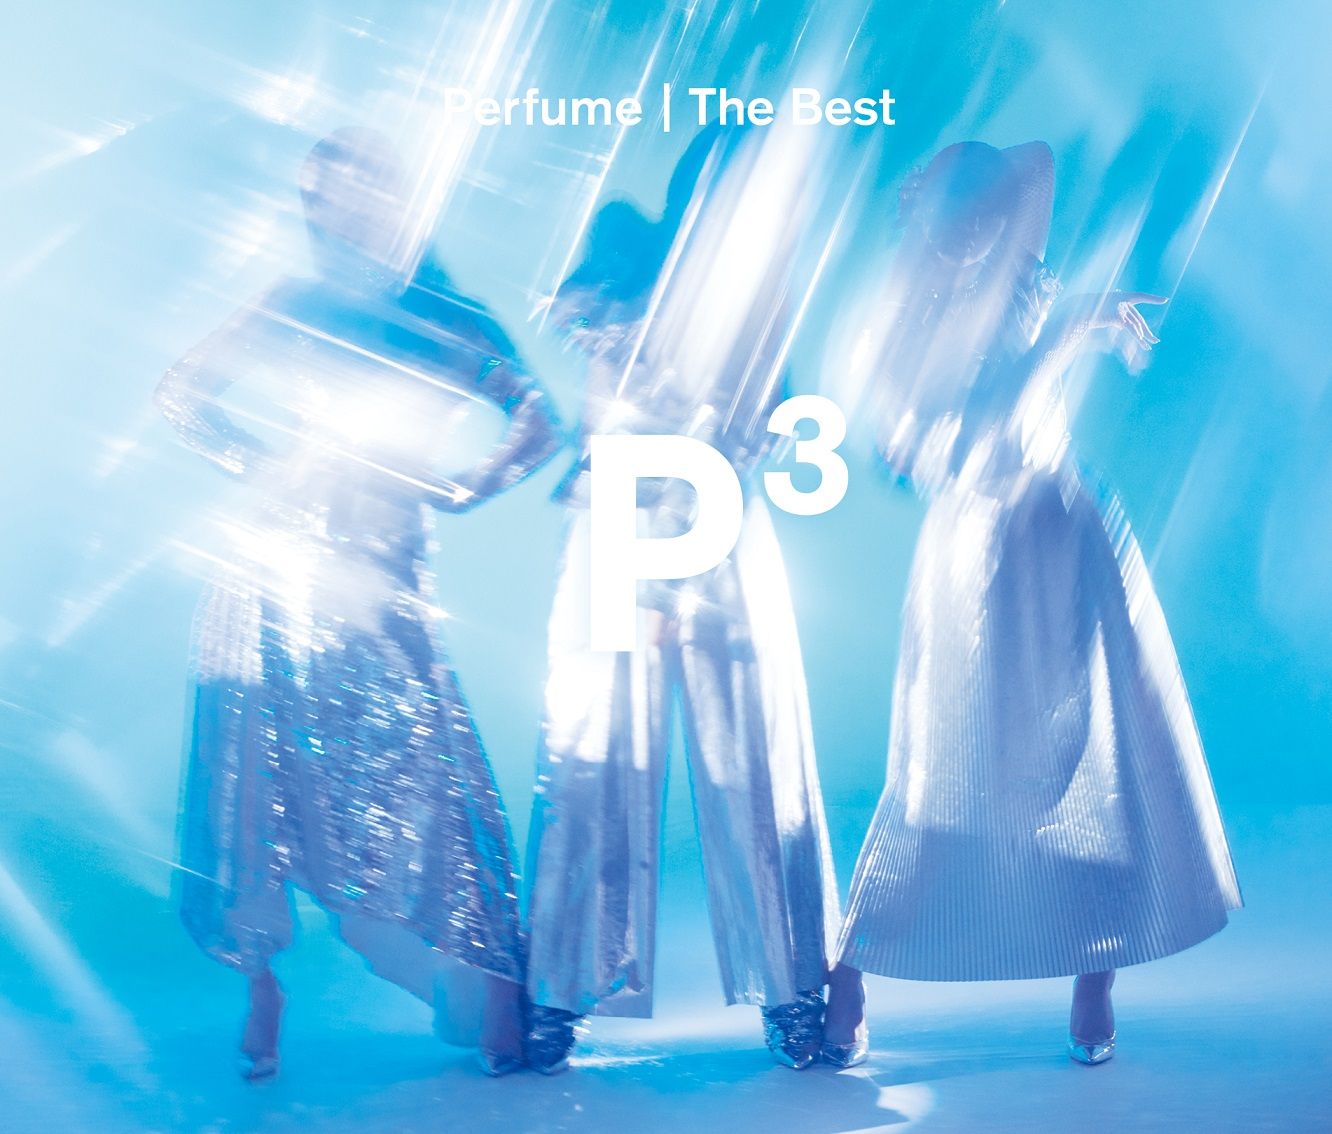 Perfume The Best hP Cubedh (ʏ 3CD) [ Perfume ]